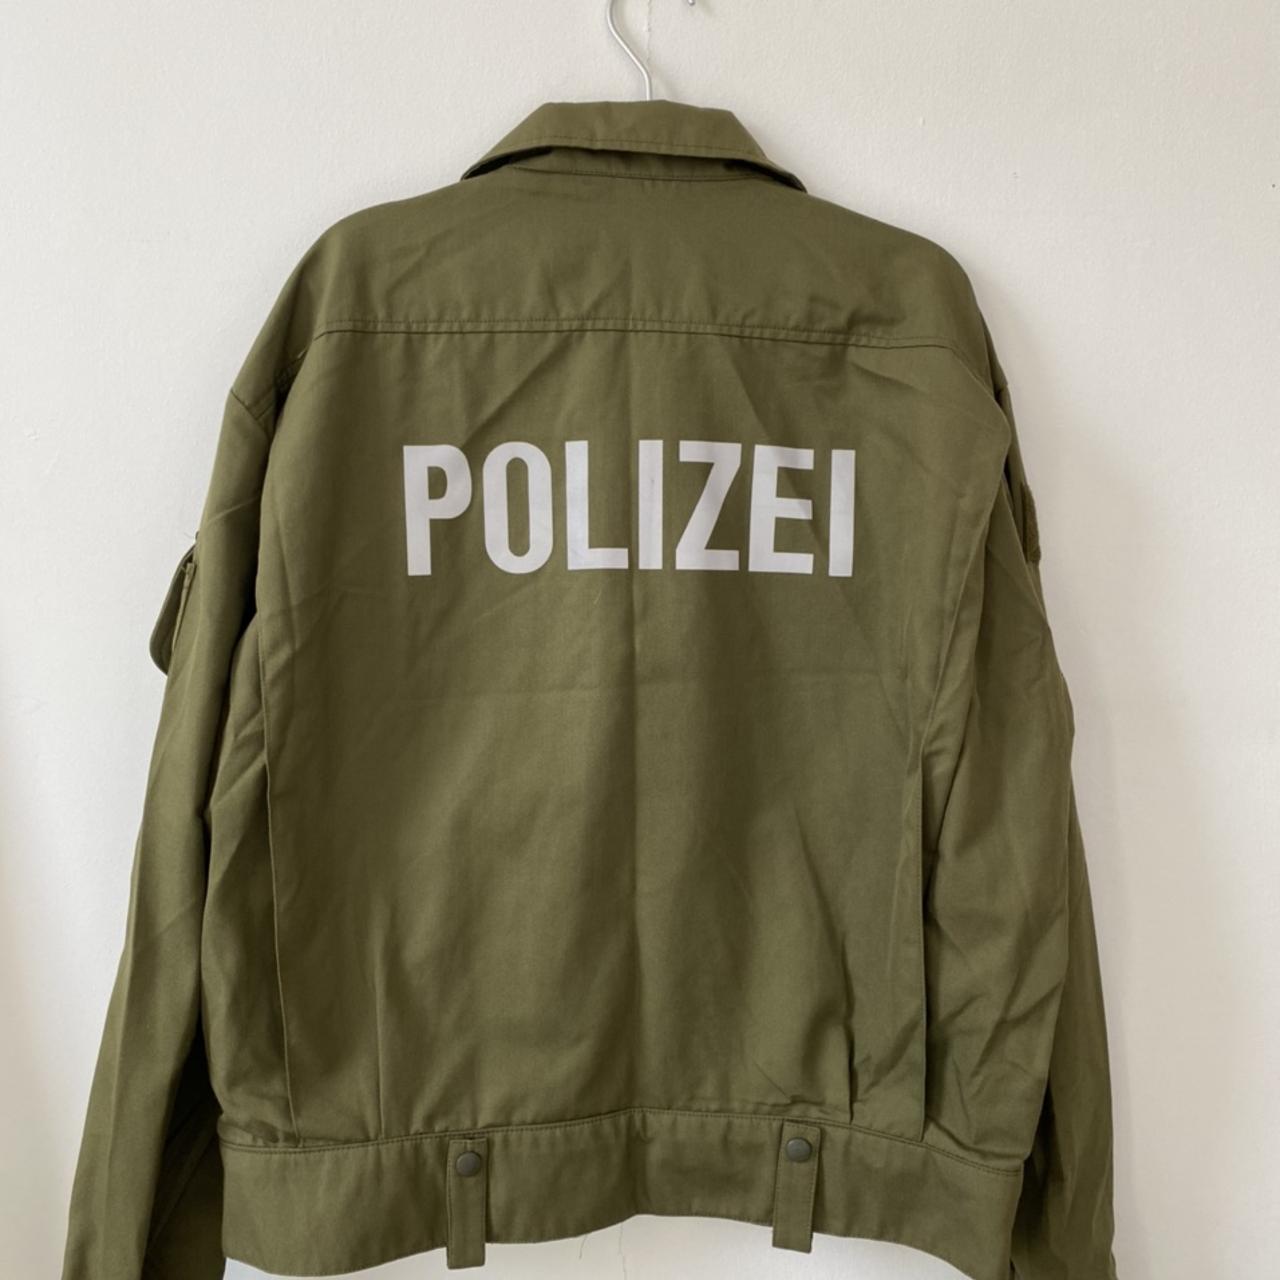 Authentic Vintage German Police ‘Polizei’ jacket.... - Depop